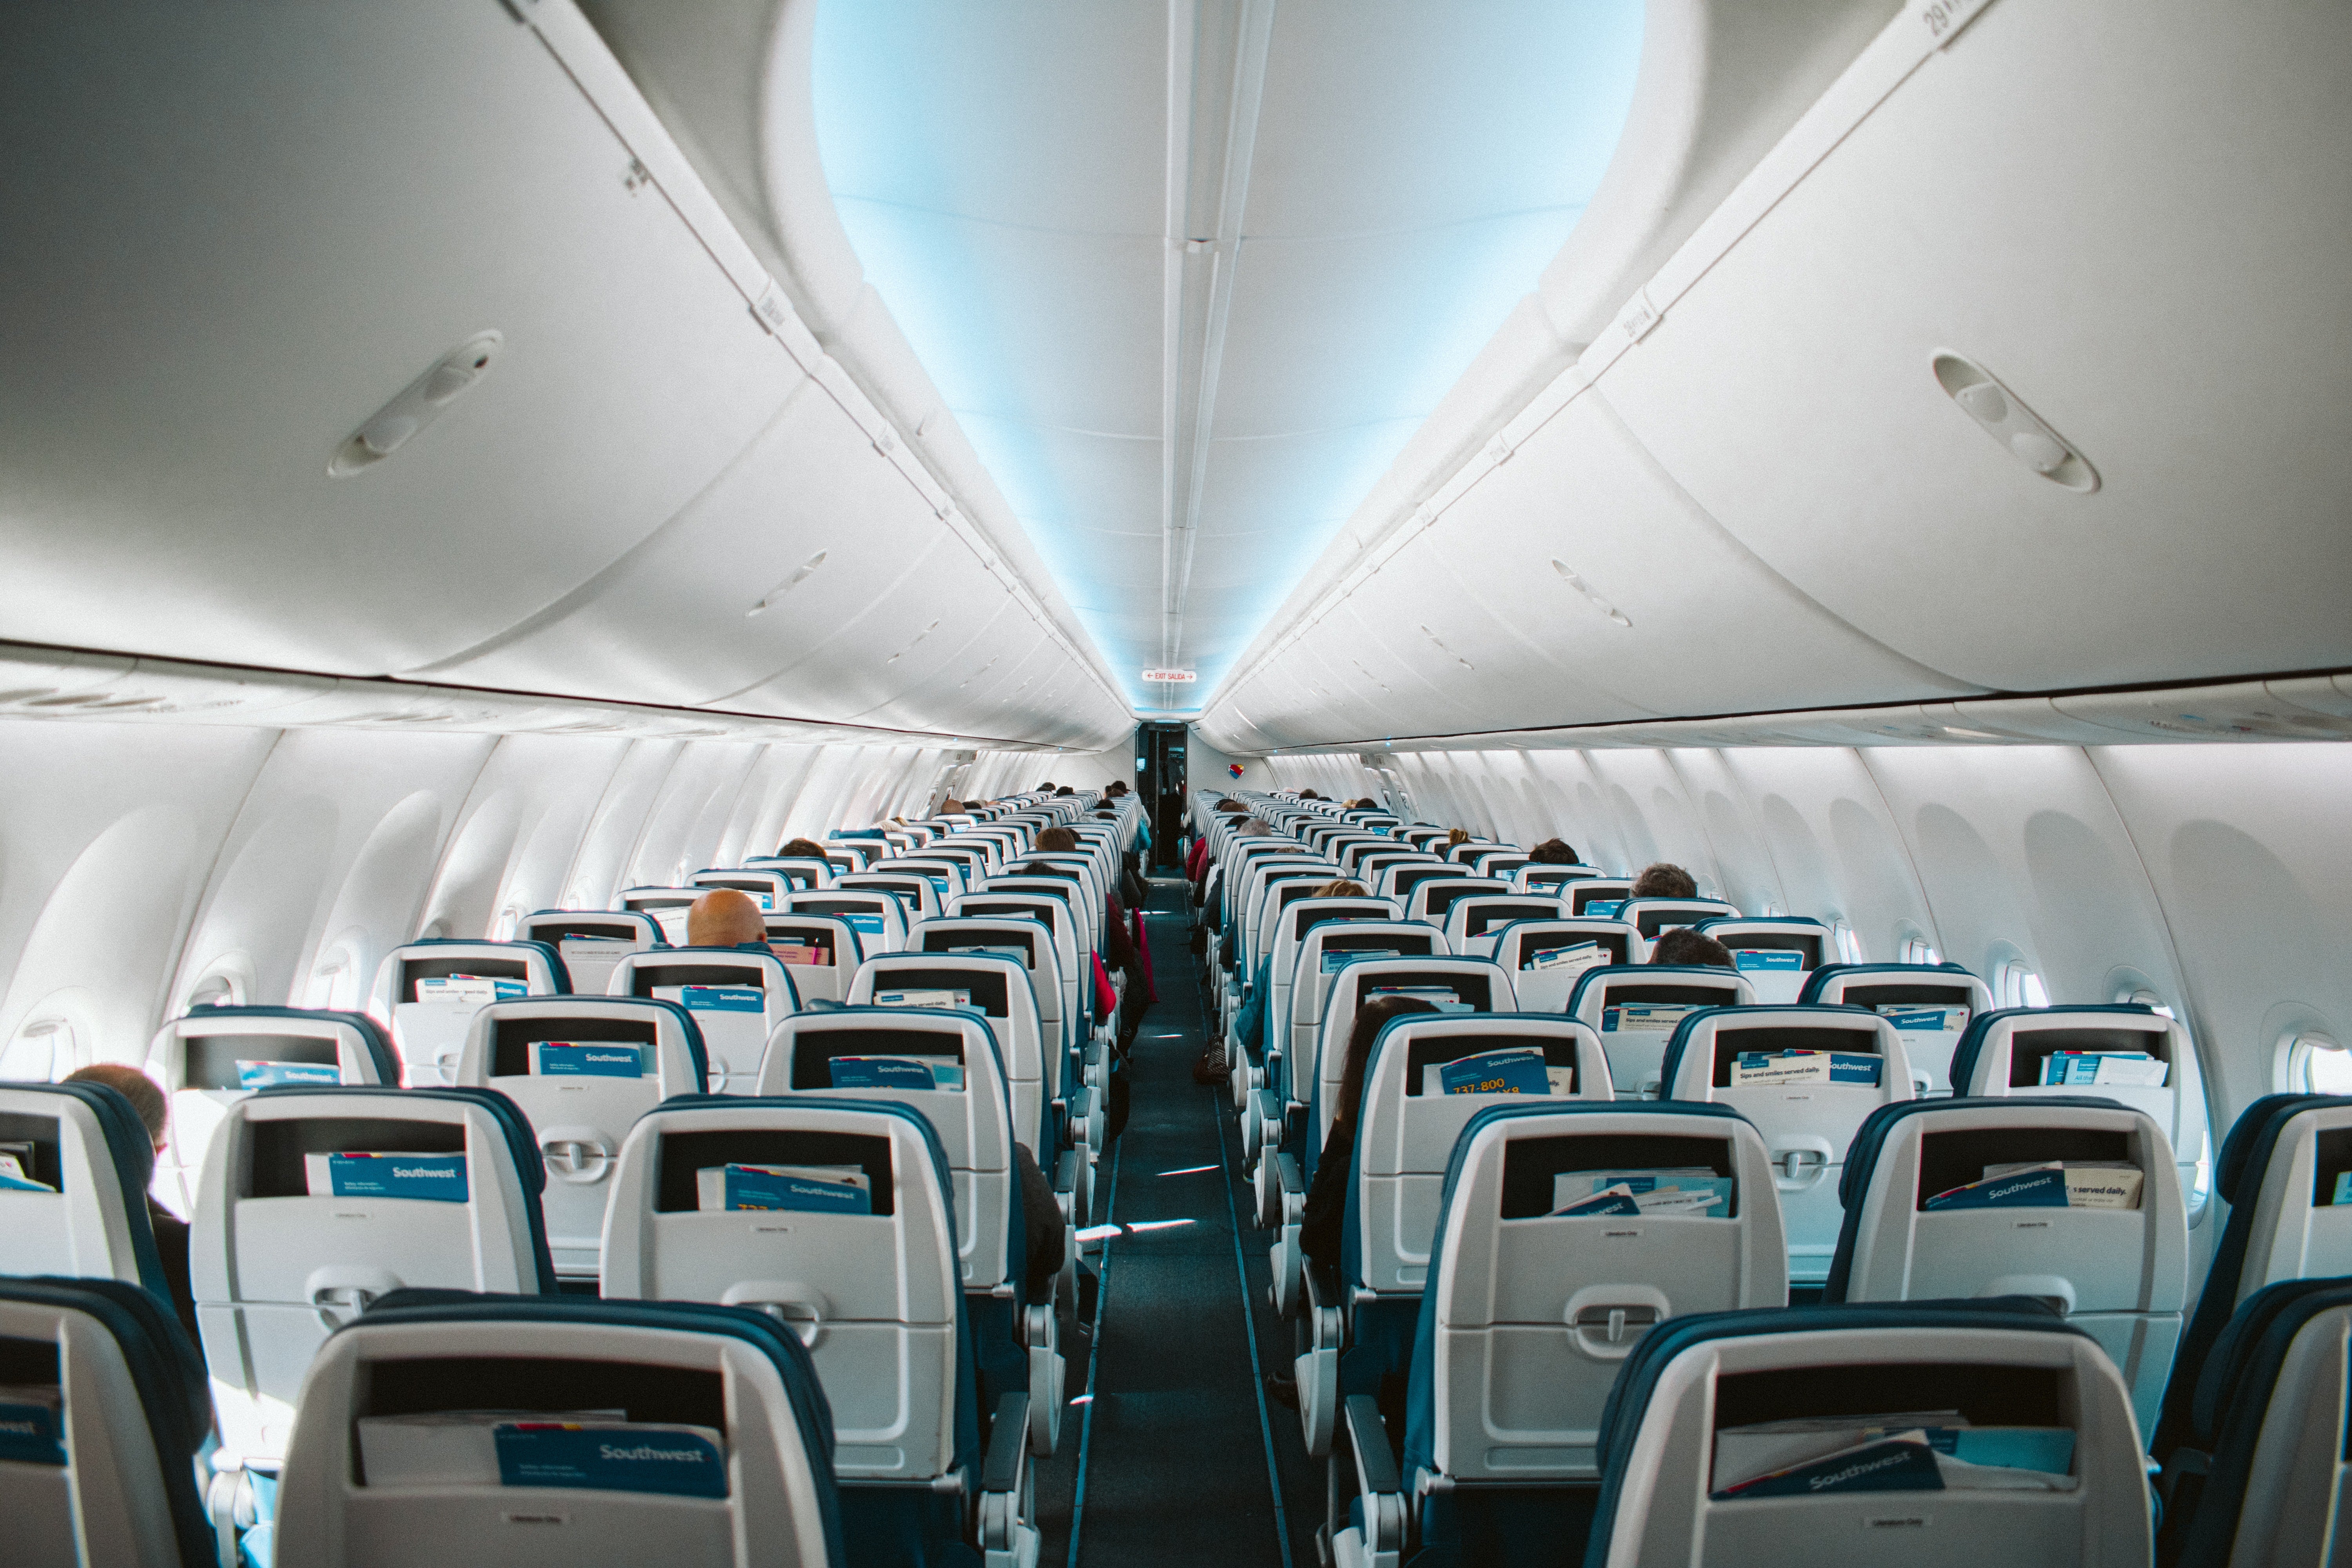 Interior of an airplane coach cabin